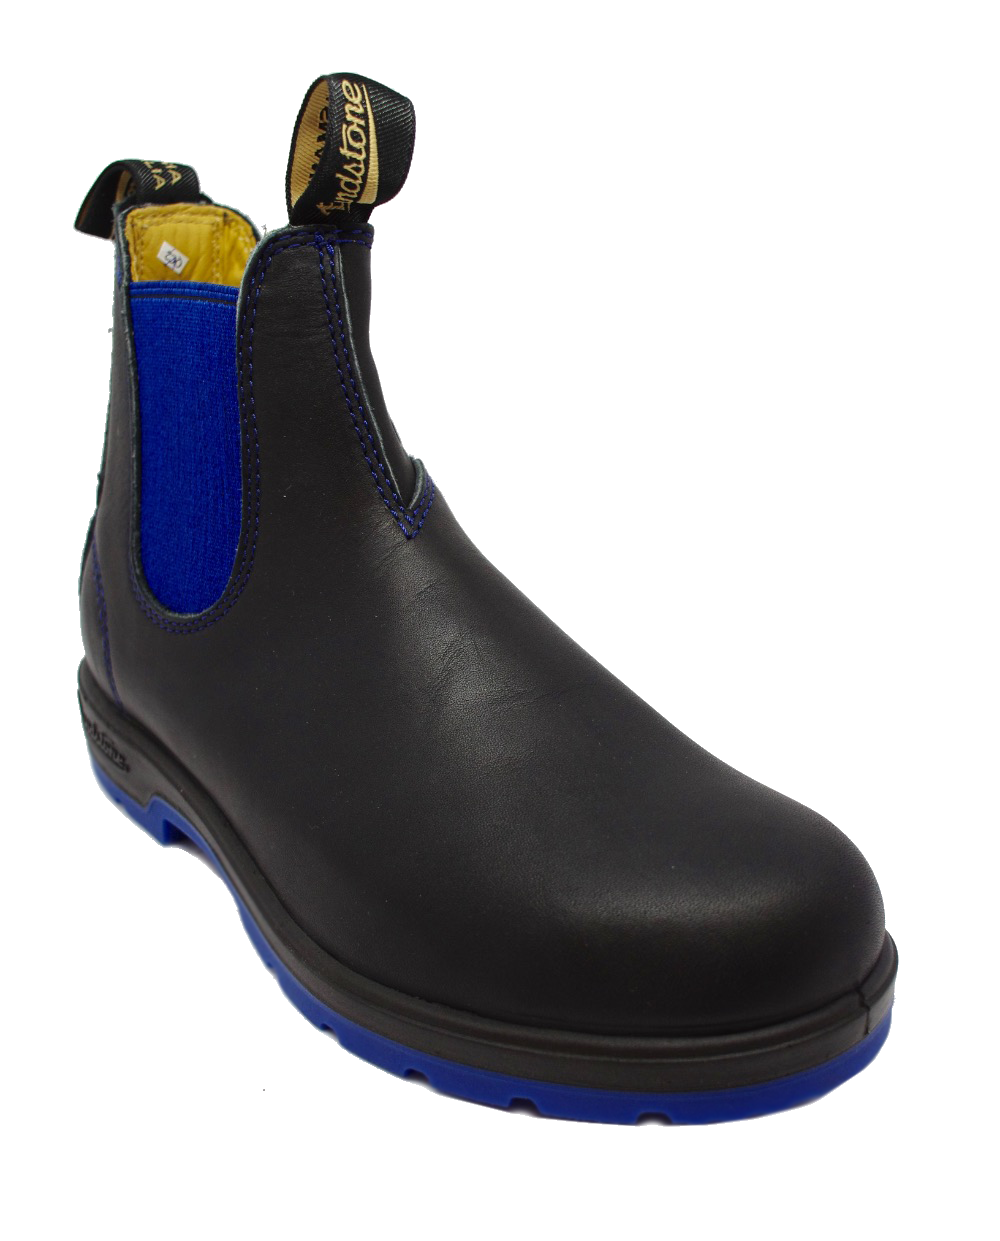 Blundstone 1403 Chelsea Boot in Black Blue Sole